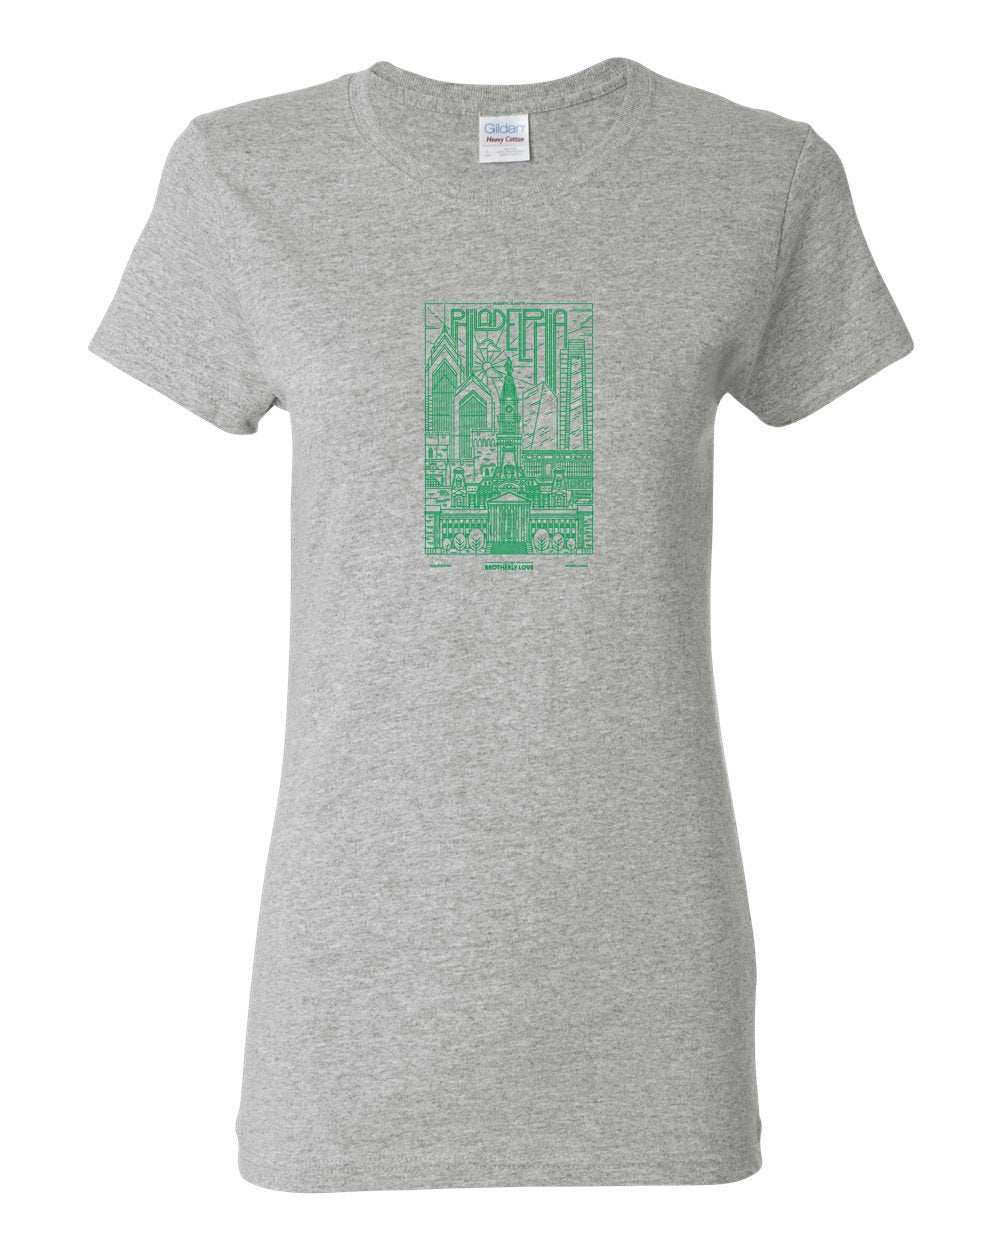 Philadelphia Skyline V2 (Green Ink) LADIES Missy-Fit T-Shirt